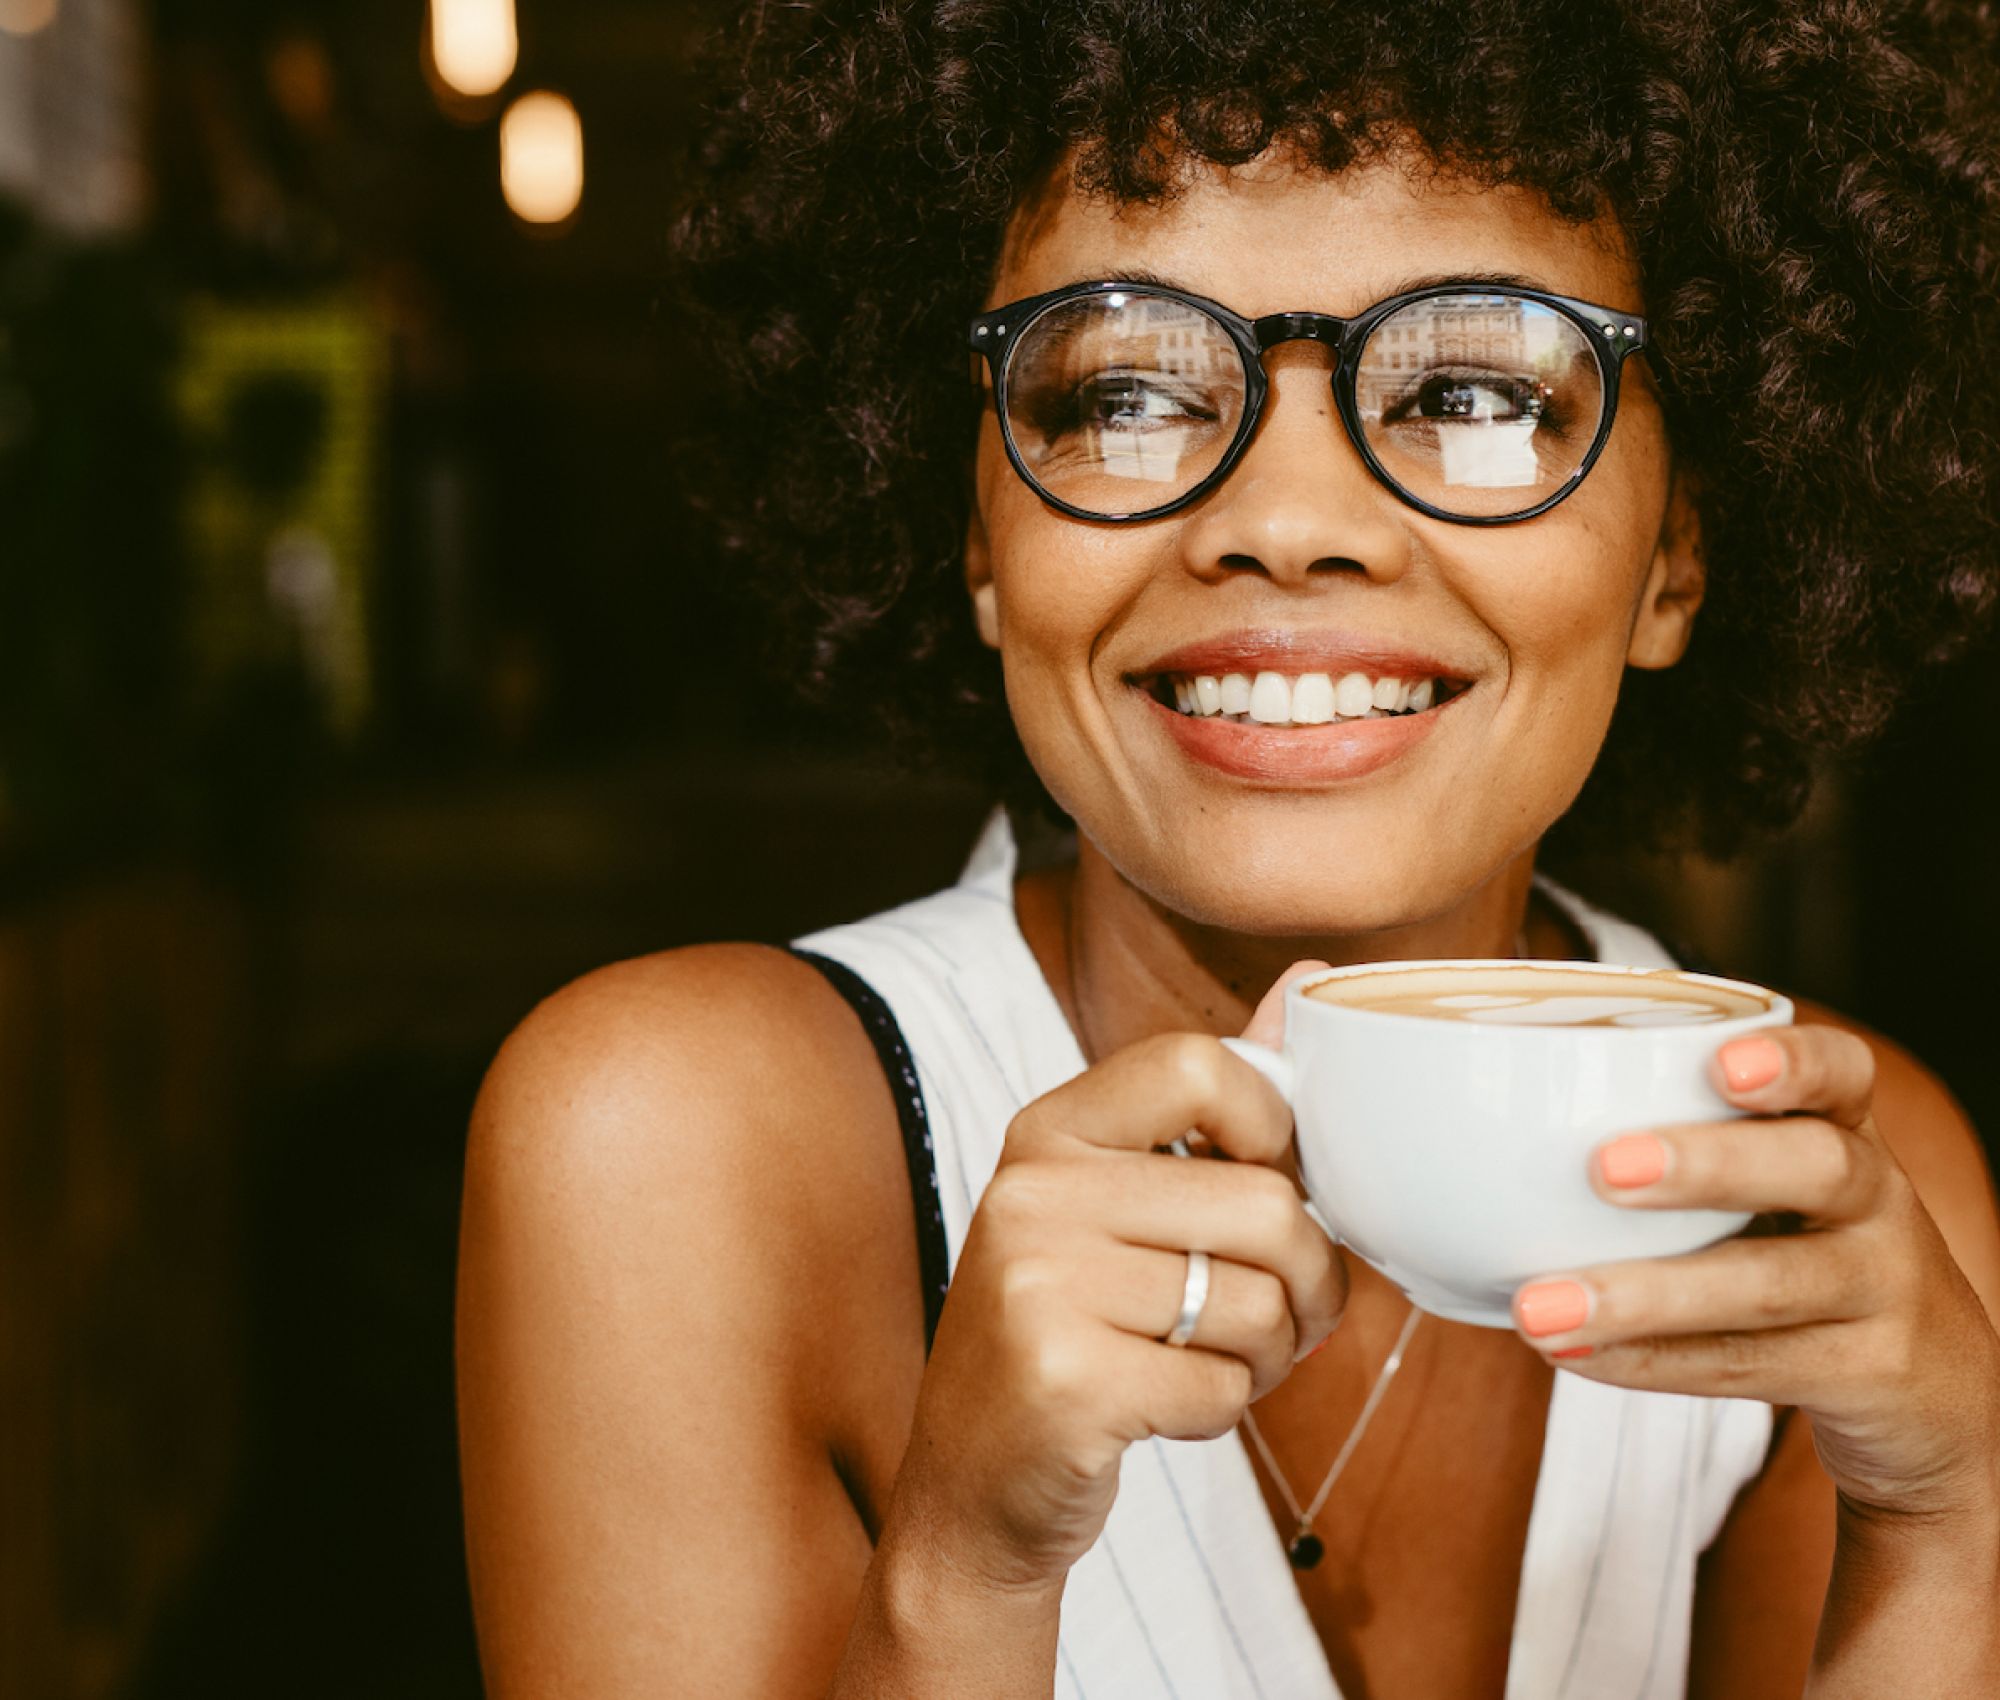 Woman smiling holding a coffee mug